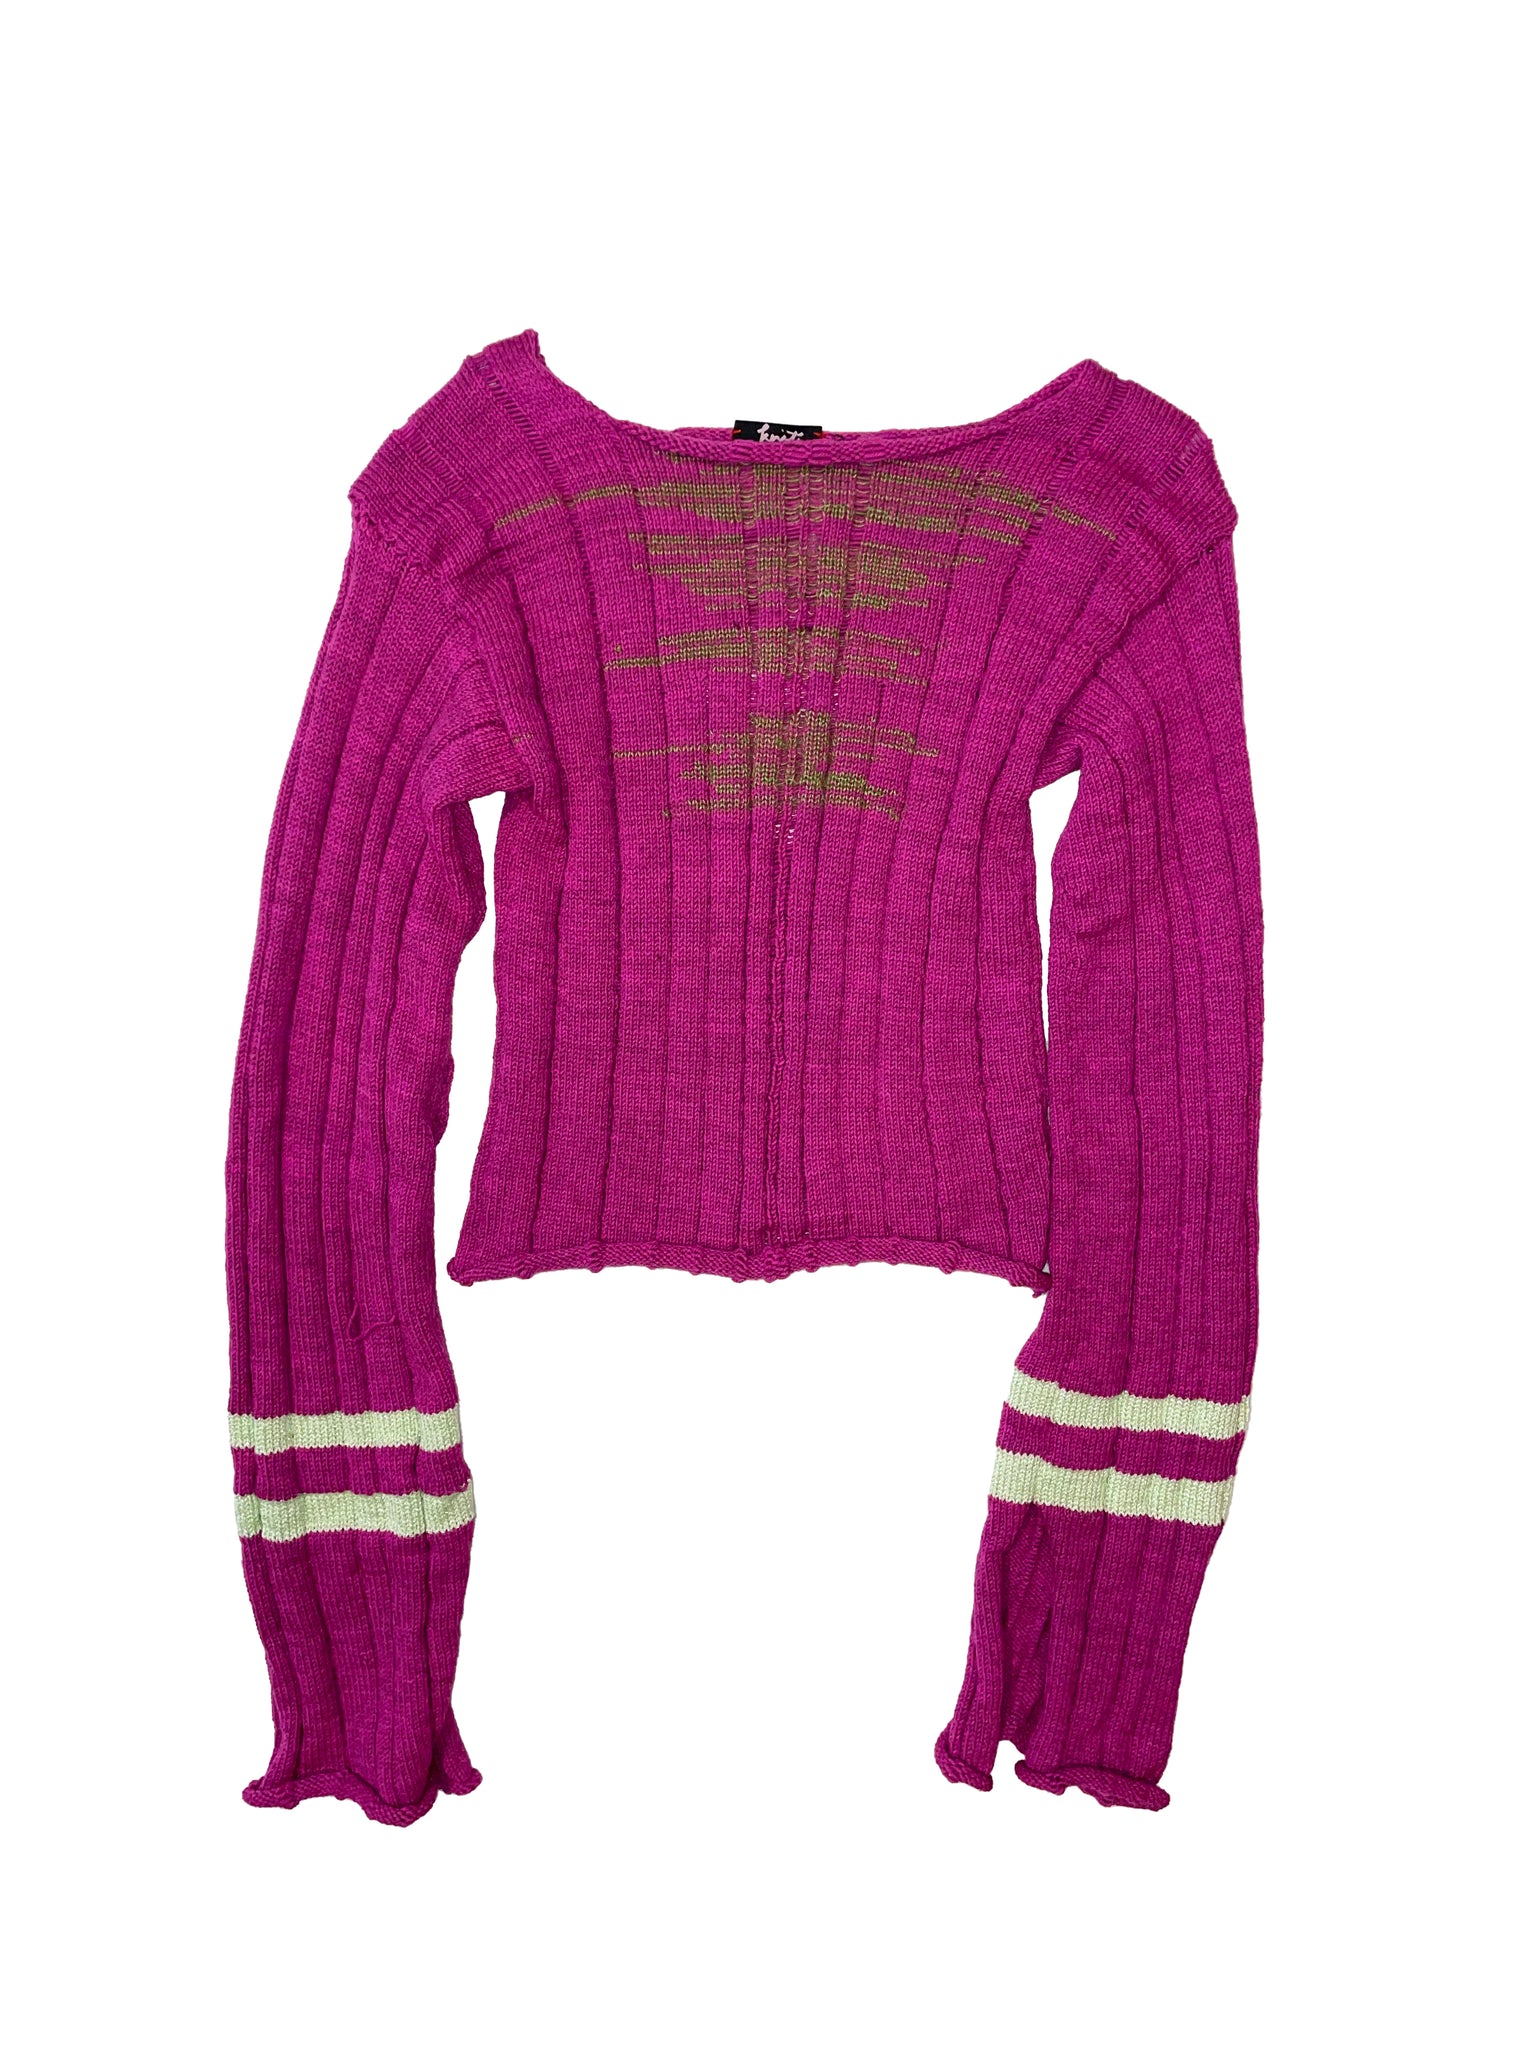 Pink wool knit